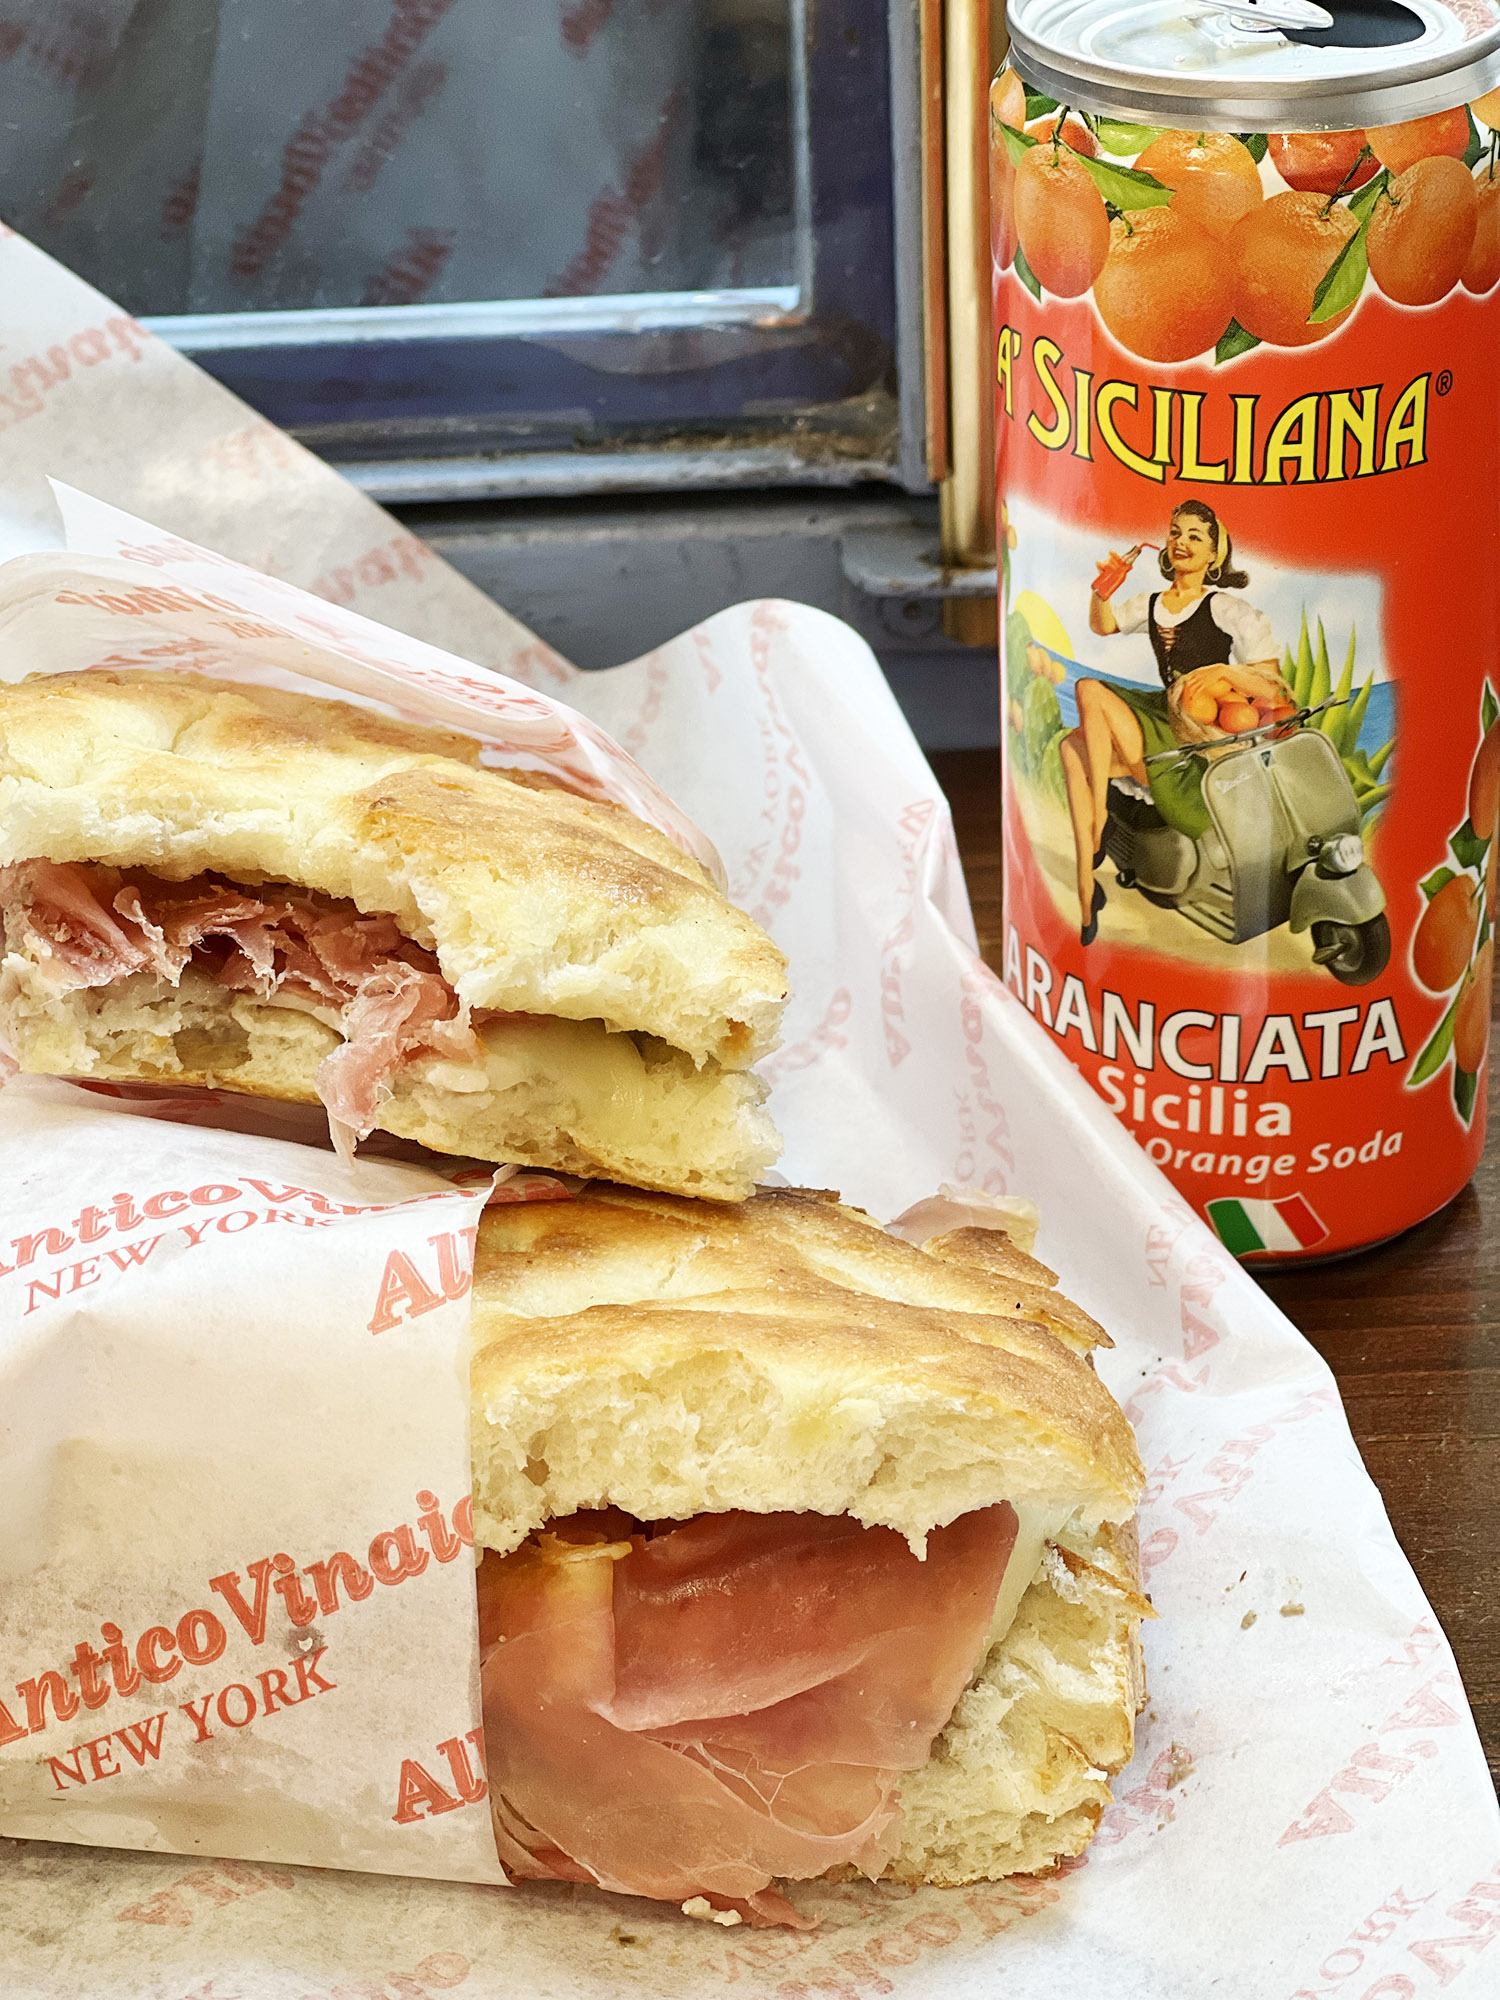 NYC: All'Antico Vinaio - An Italian sandwich shop in Greenwich Village